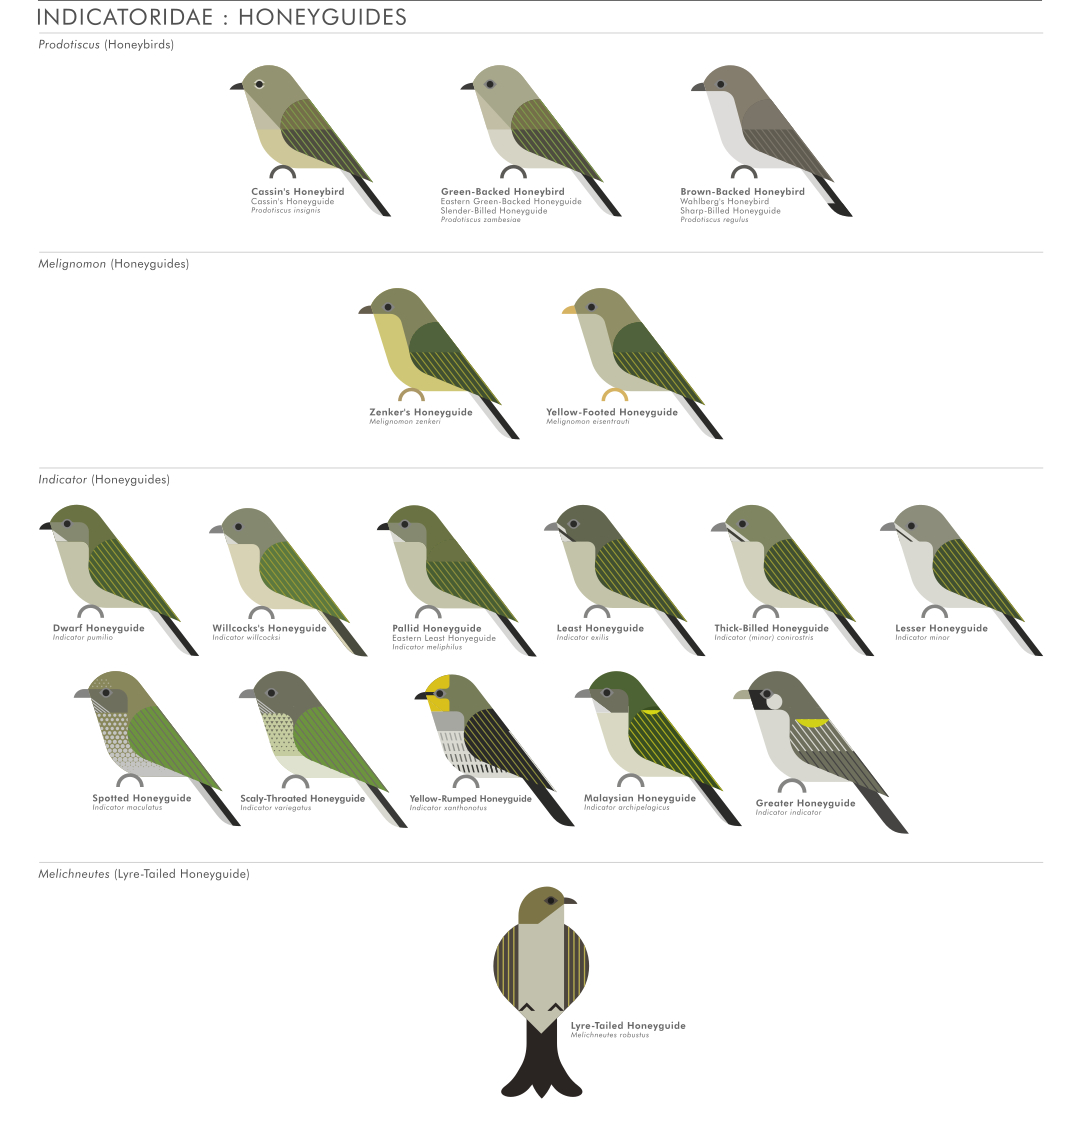 scott partridge - ave - avian vector encyclopedia - honeyguides - Indicatoridae - piciformes - vector bird art